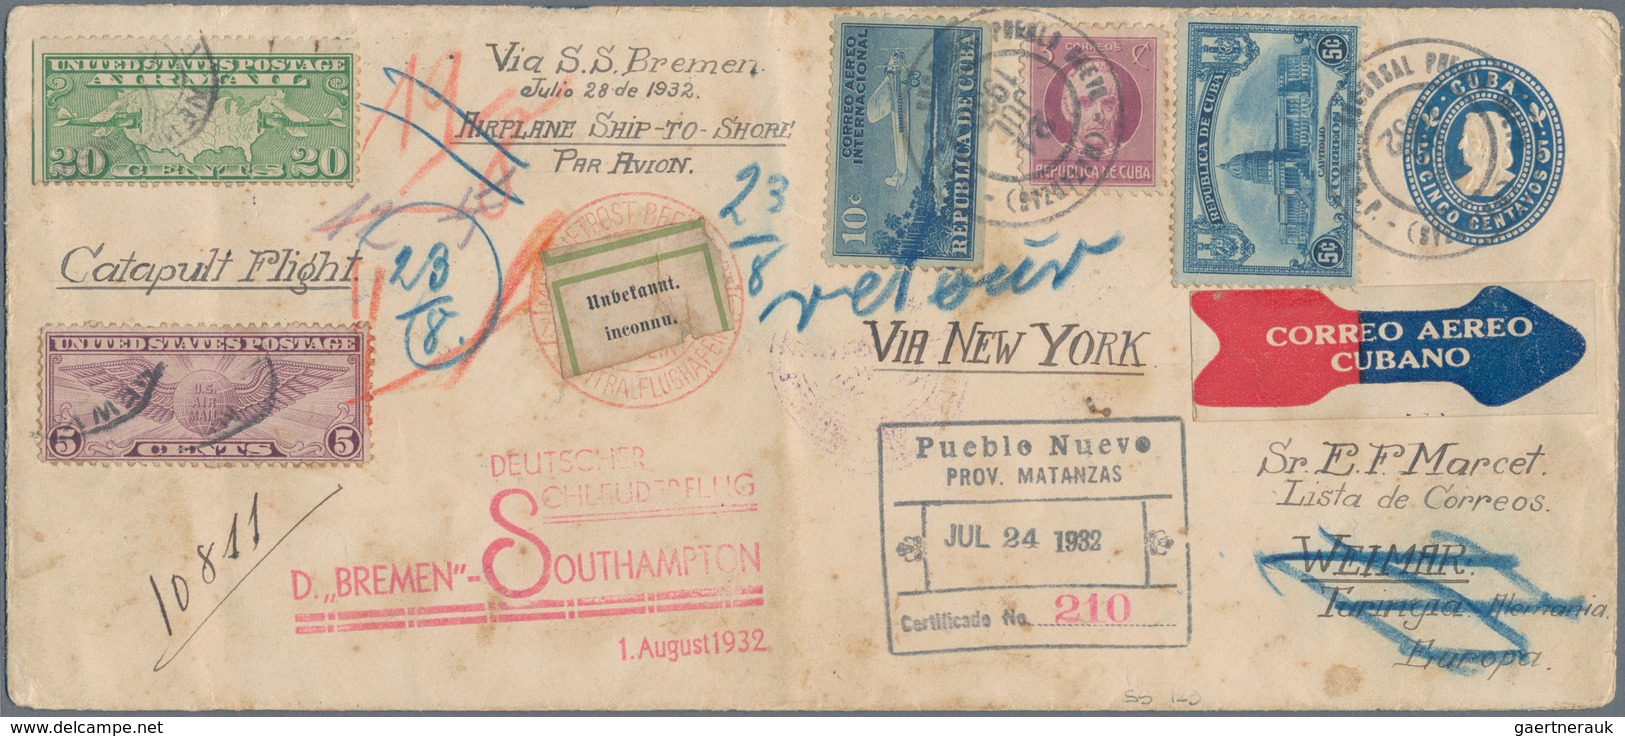 Katapult- / Schleuderflugpost: 1932, Cuba, 5 C Blue Postal Stationery Envelope, Uprated With 3 C Vio - Luft- Und Zeppelinpost